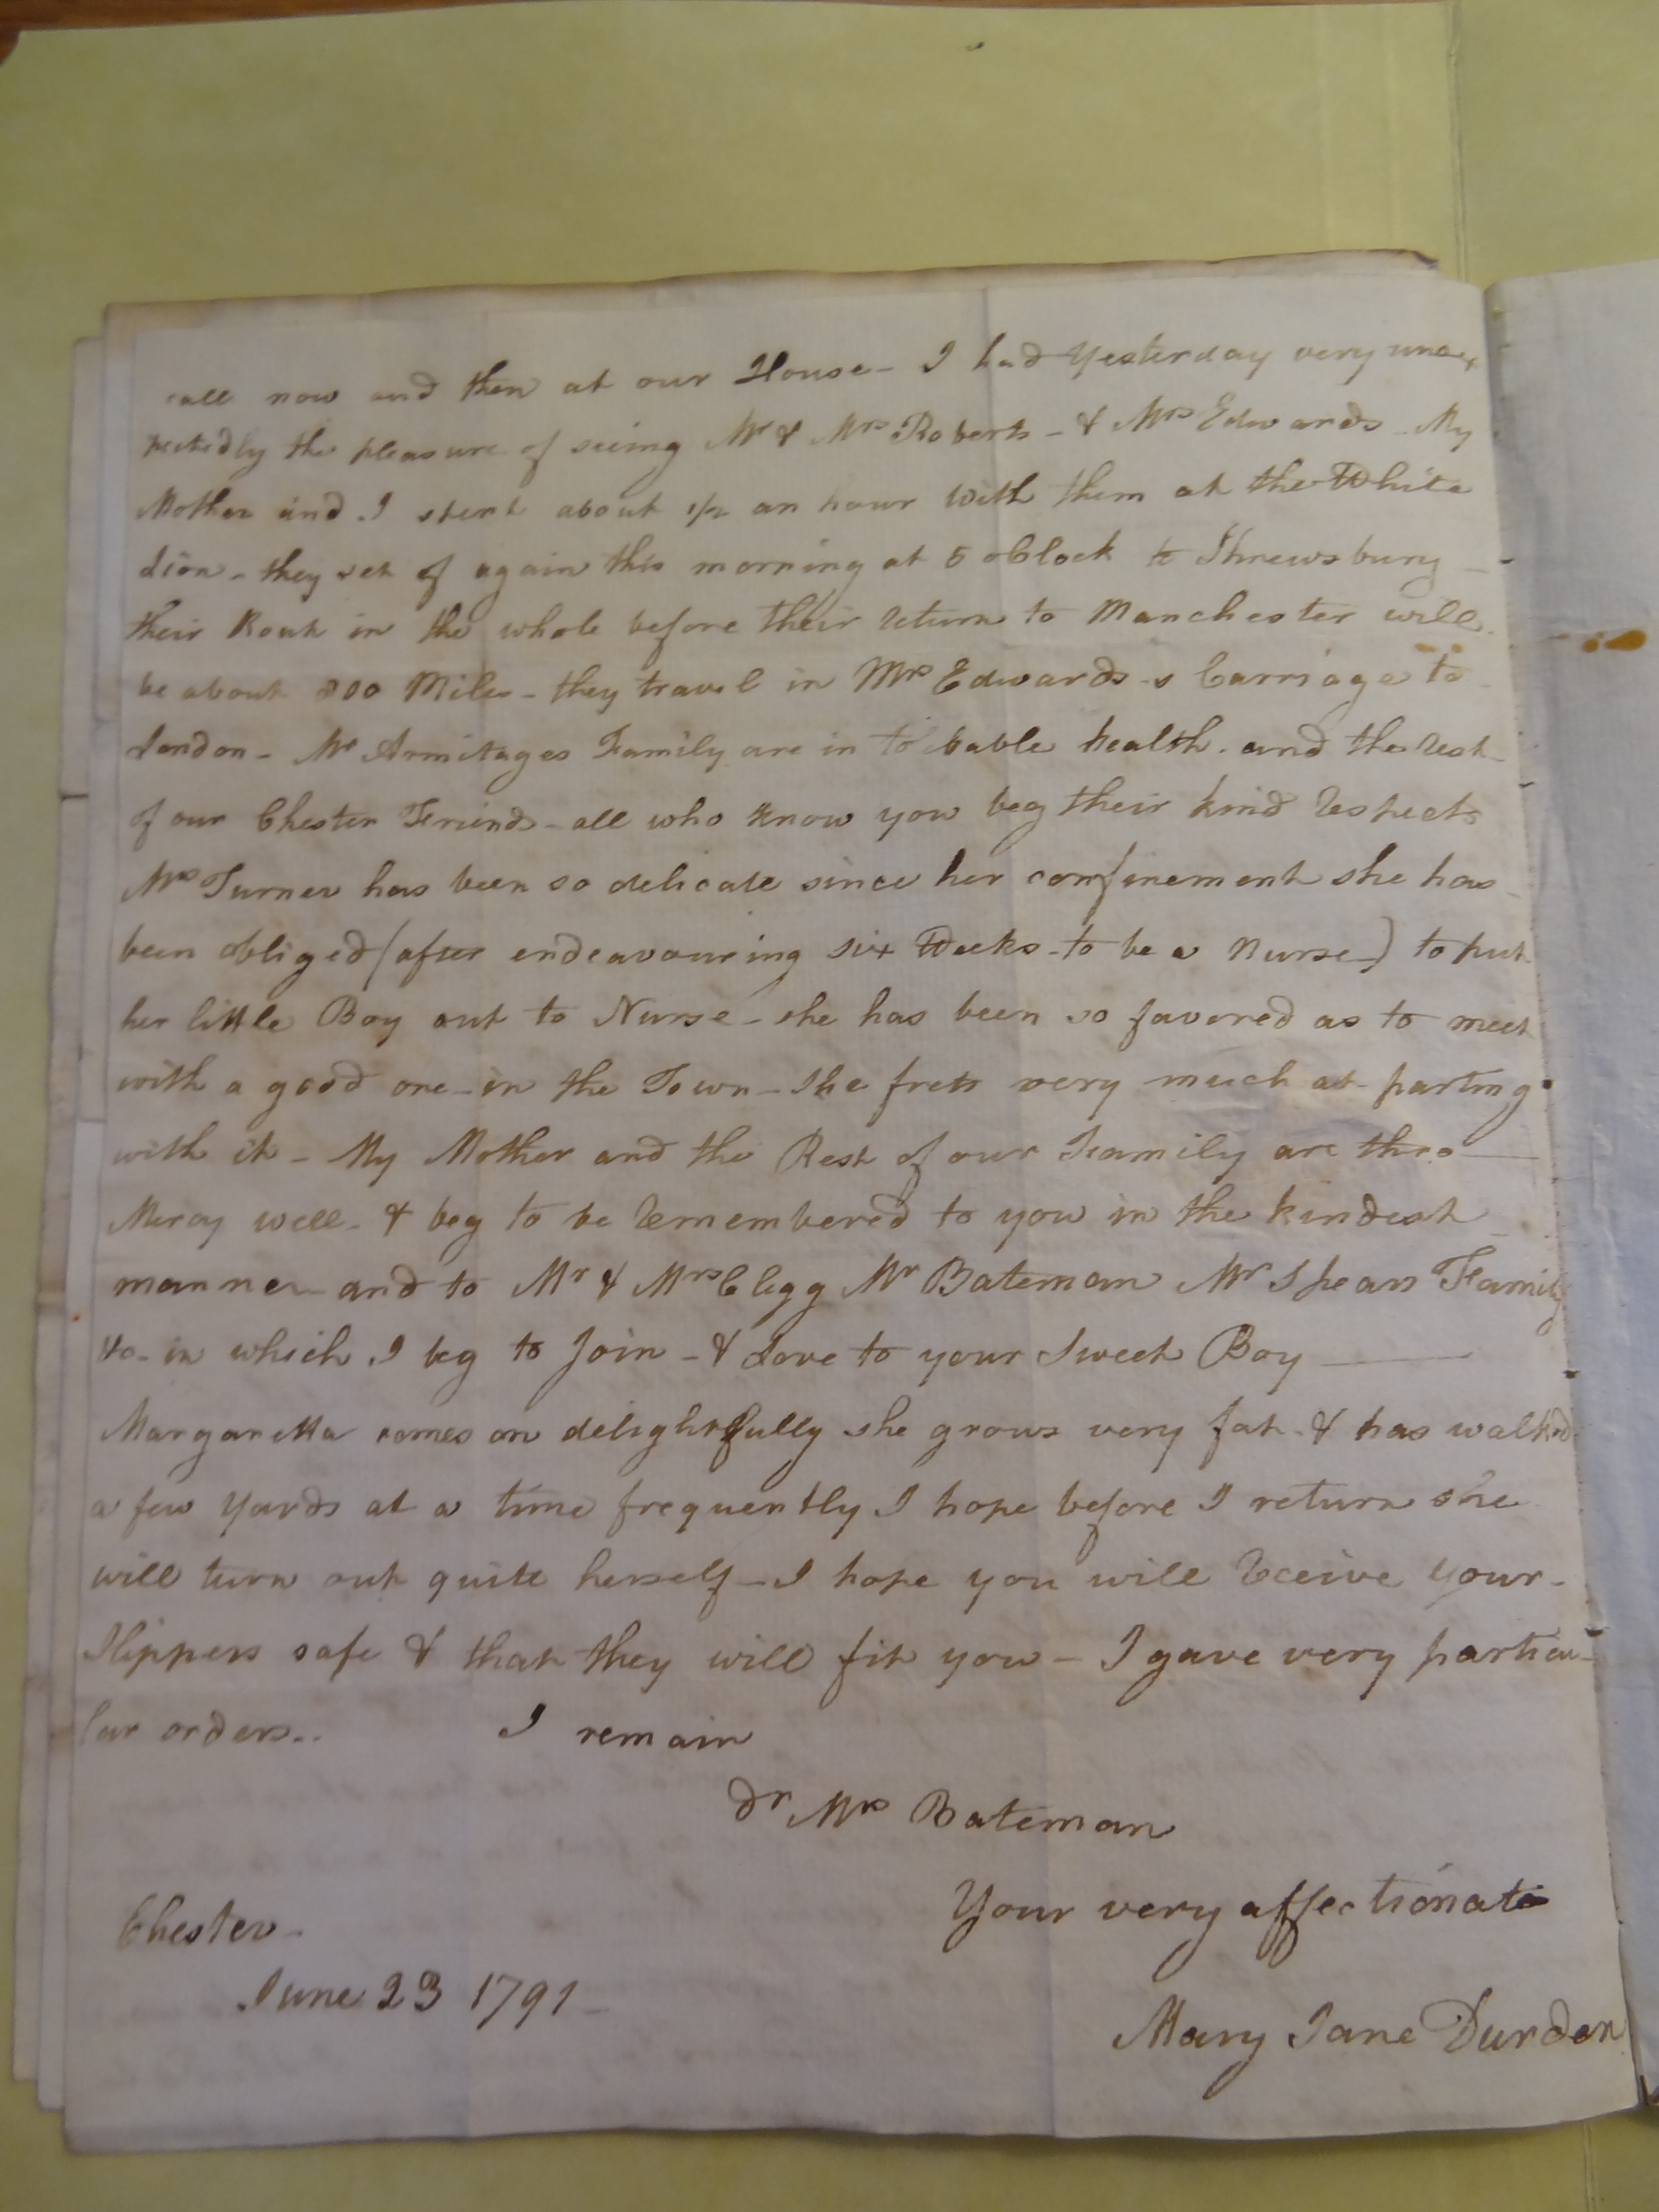 Image #2 of letter: Mary Jane Hodson to Rebekah Bateman, 23 June 1791